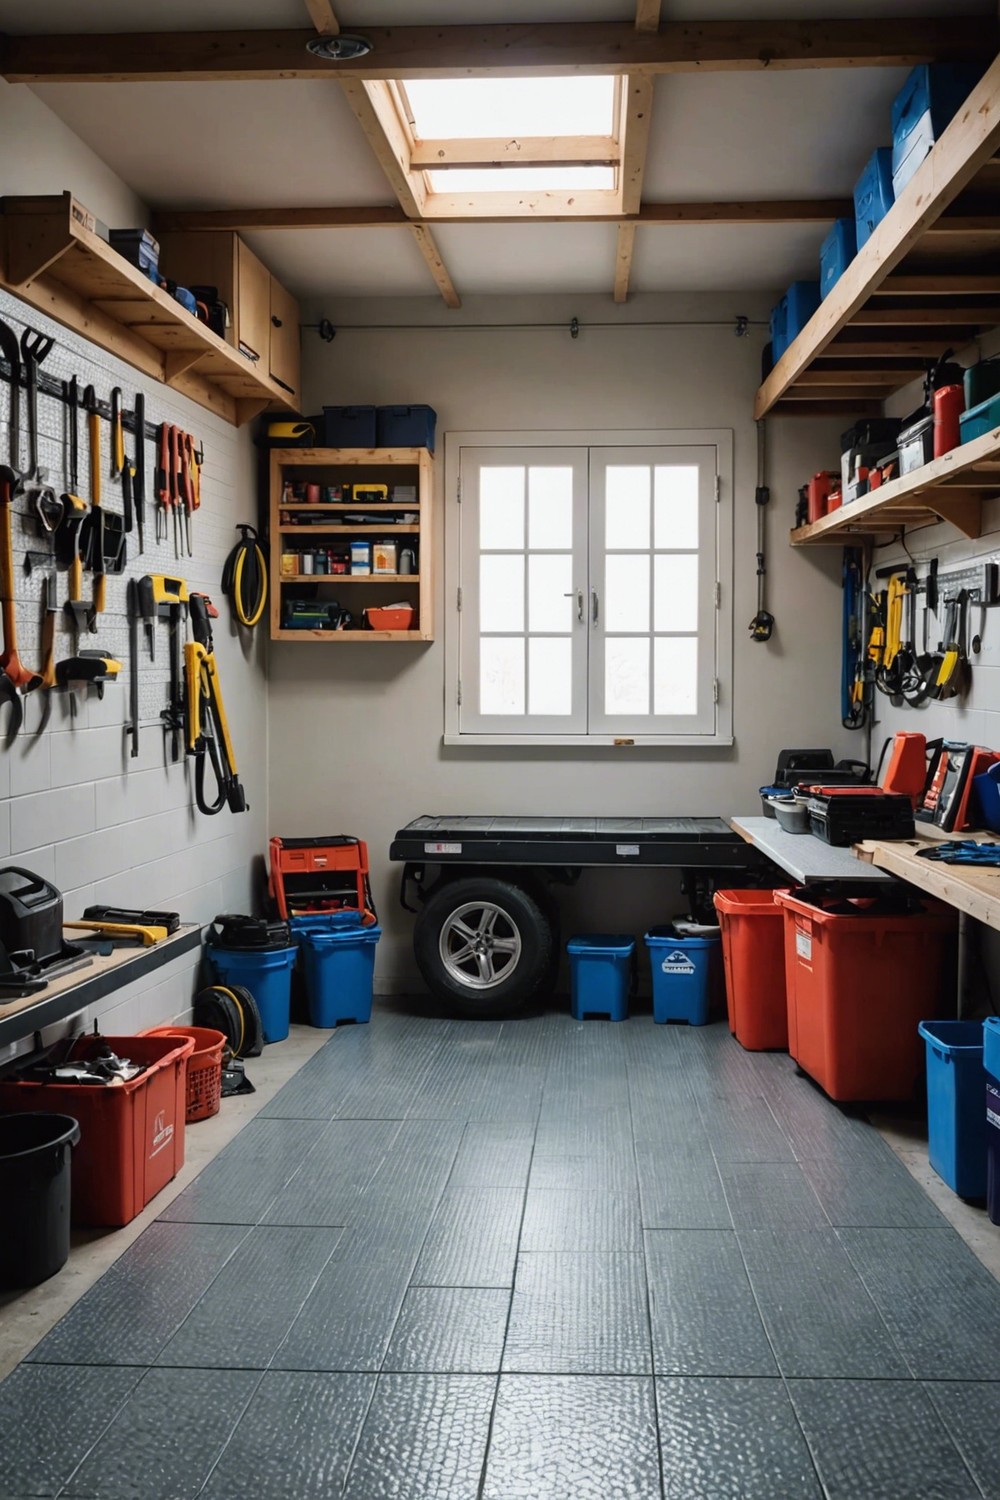 Garage Floor Tiles: Interlocking and Easy to Install